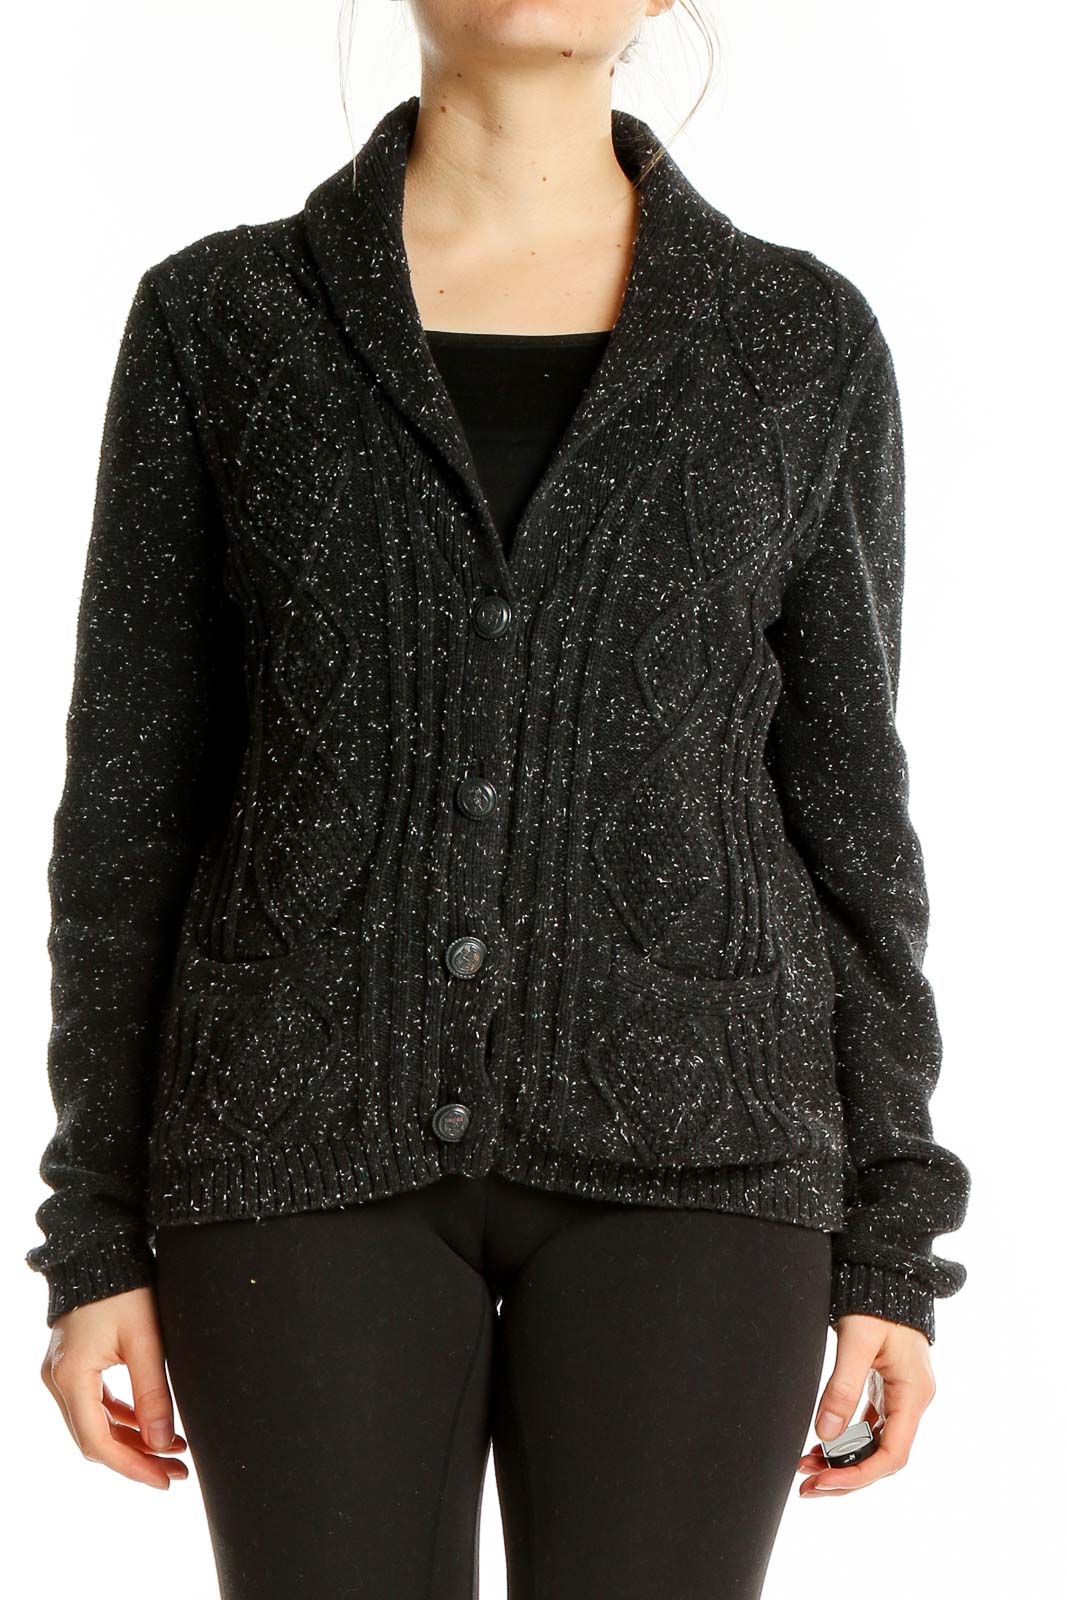 Black Mottled Sweater Front